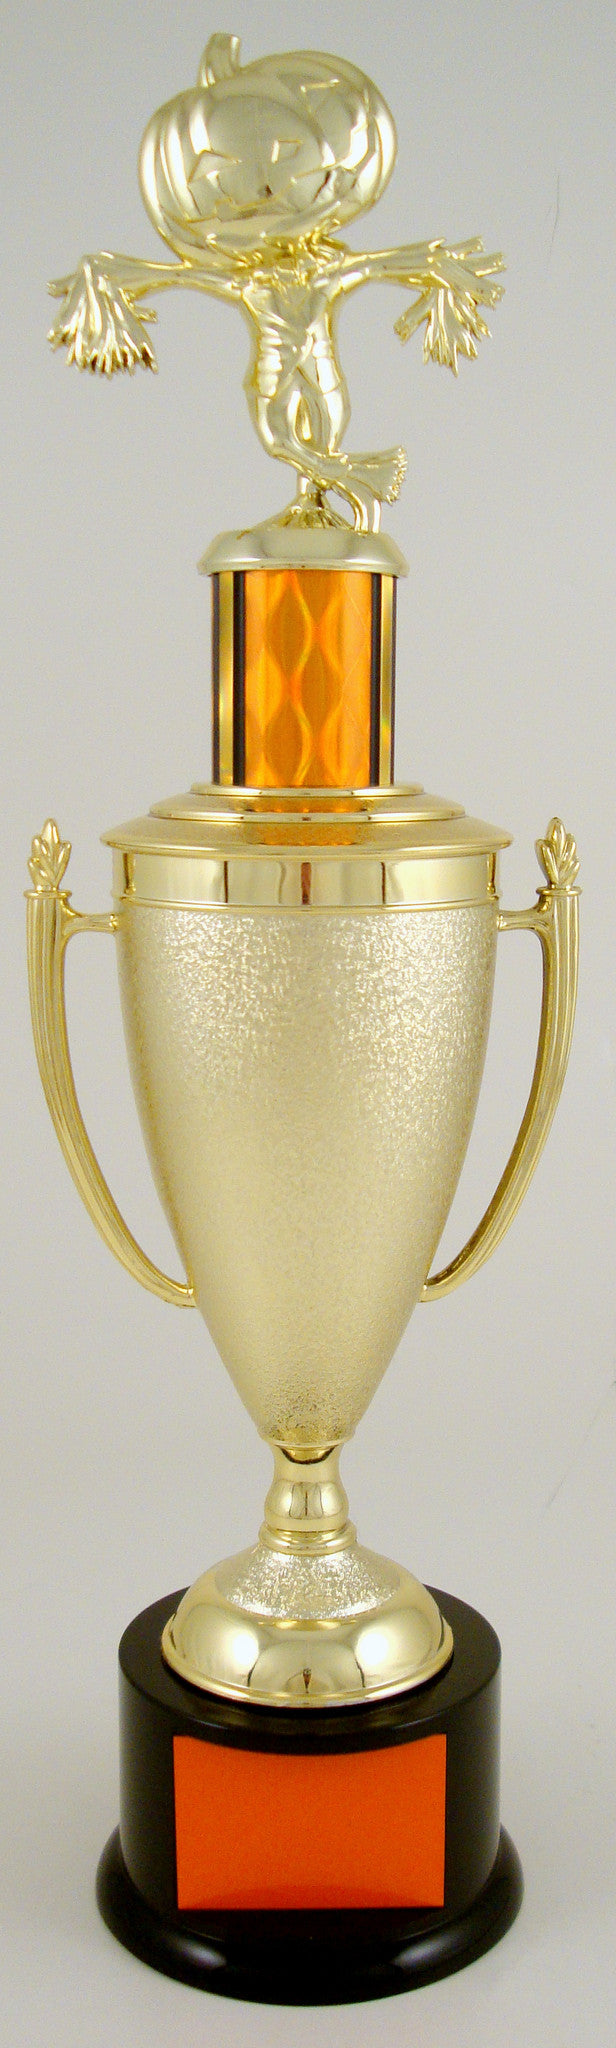 Large Halloween Cup Trophy With Figure-Trophy-Schoppy&